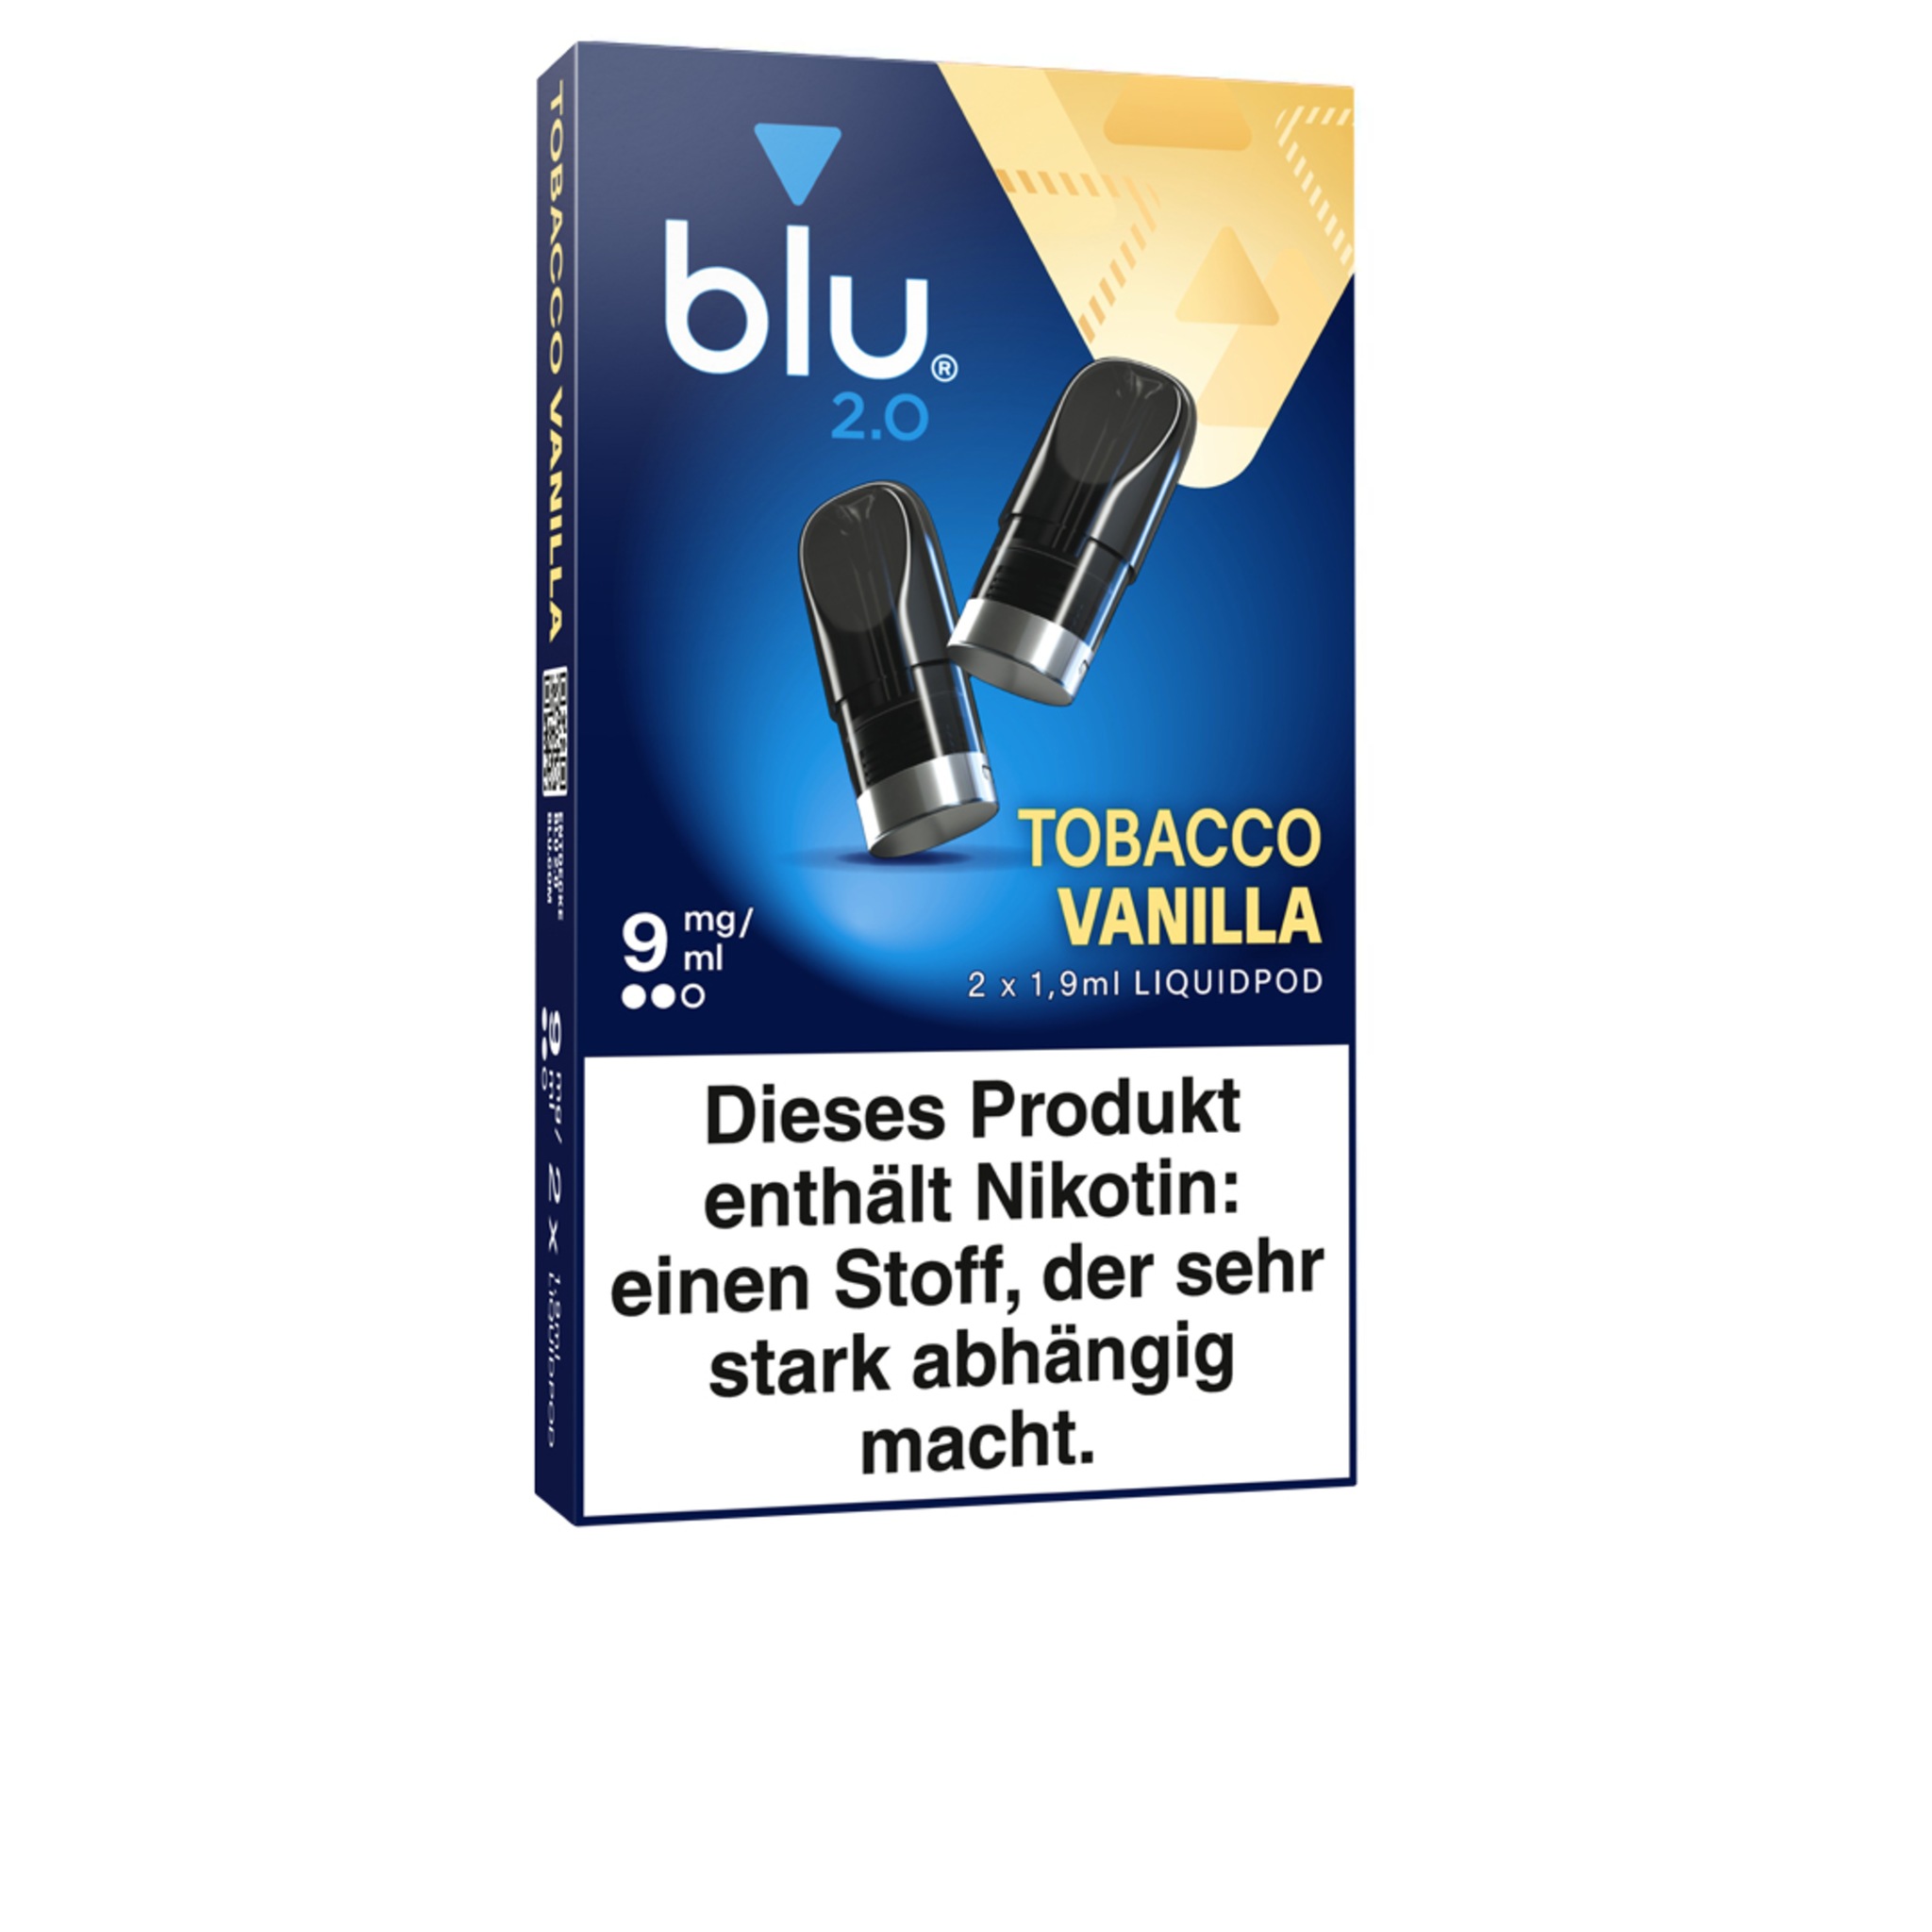 Blu 2.0 - Tobacco Vanilla